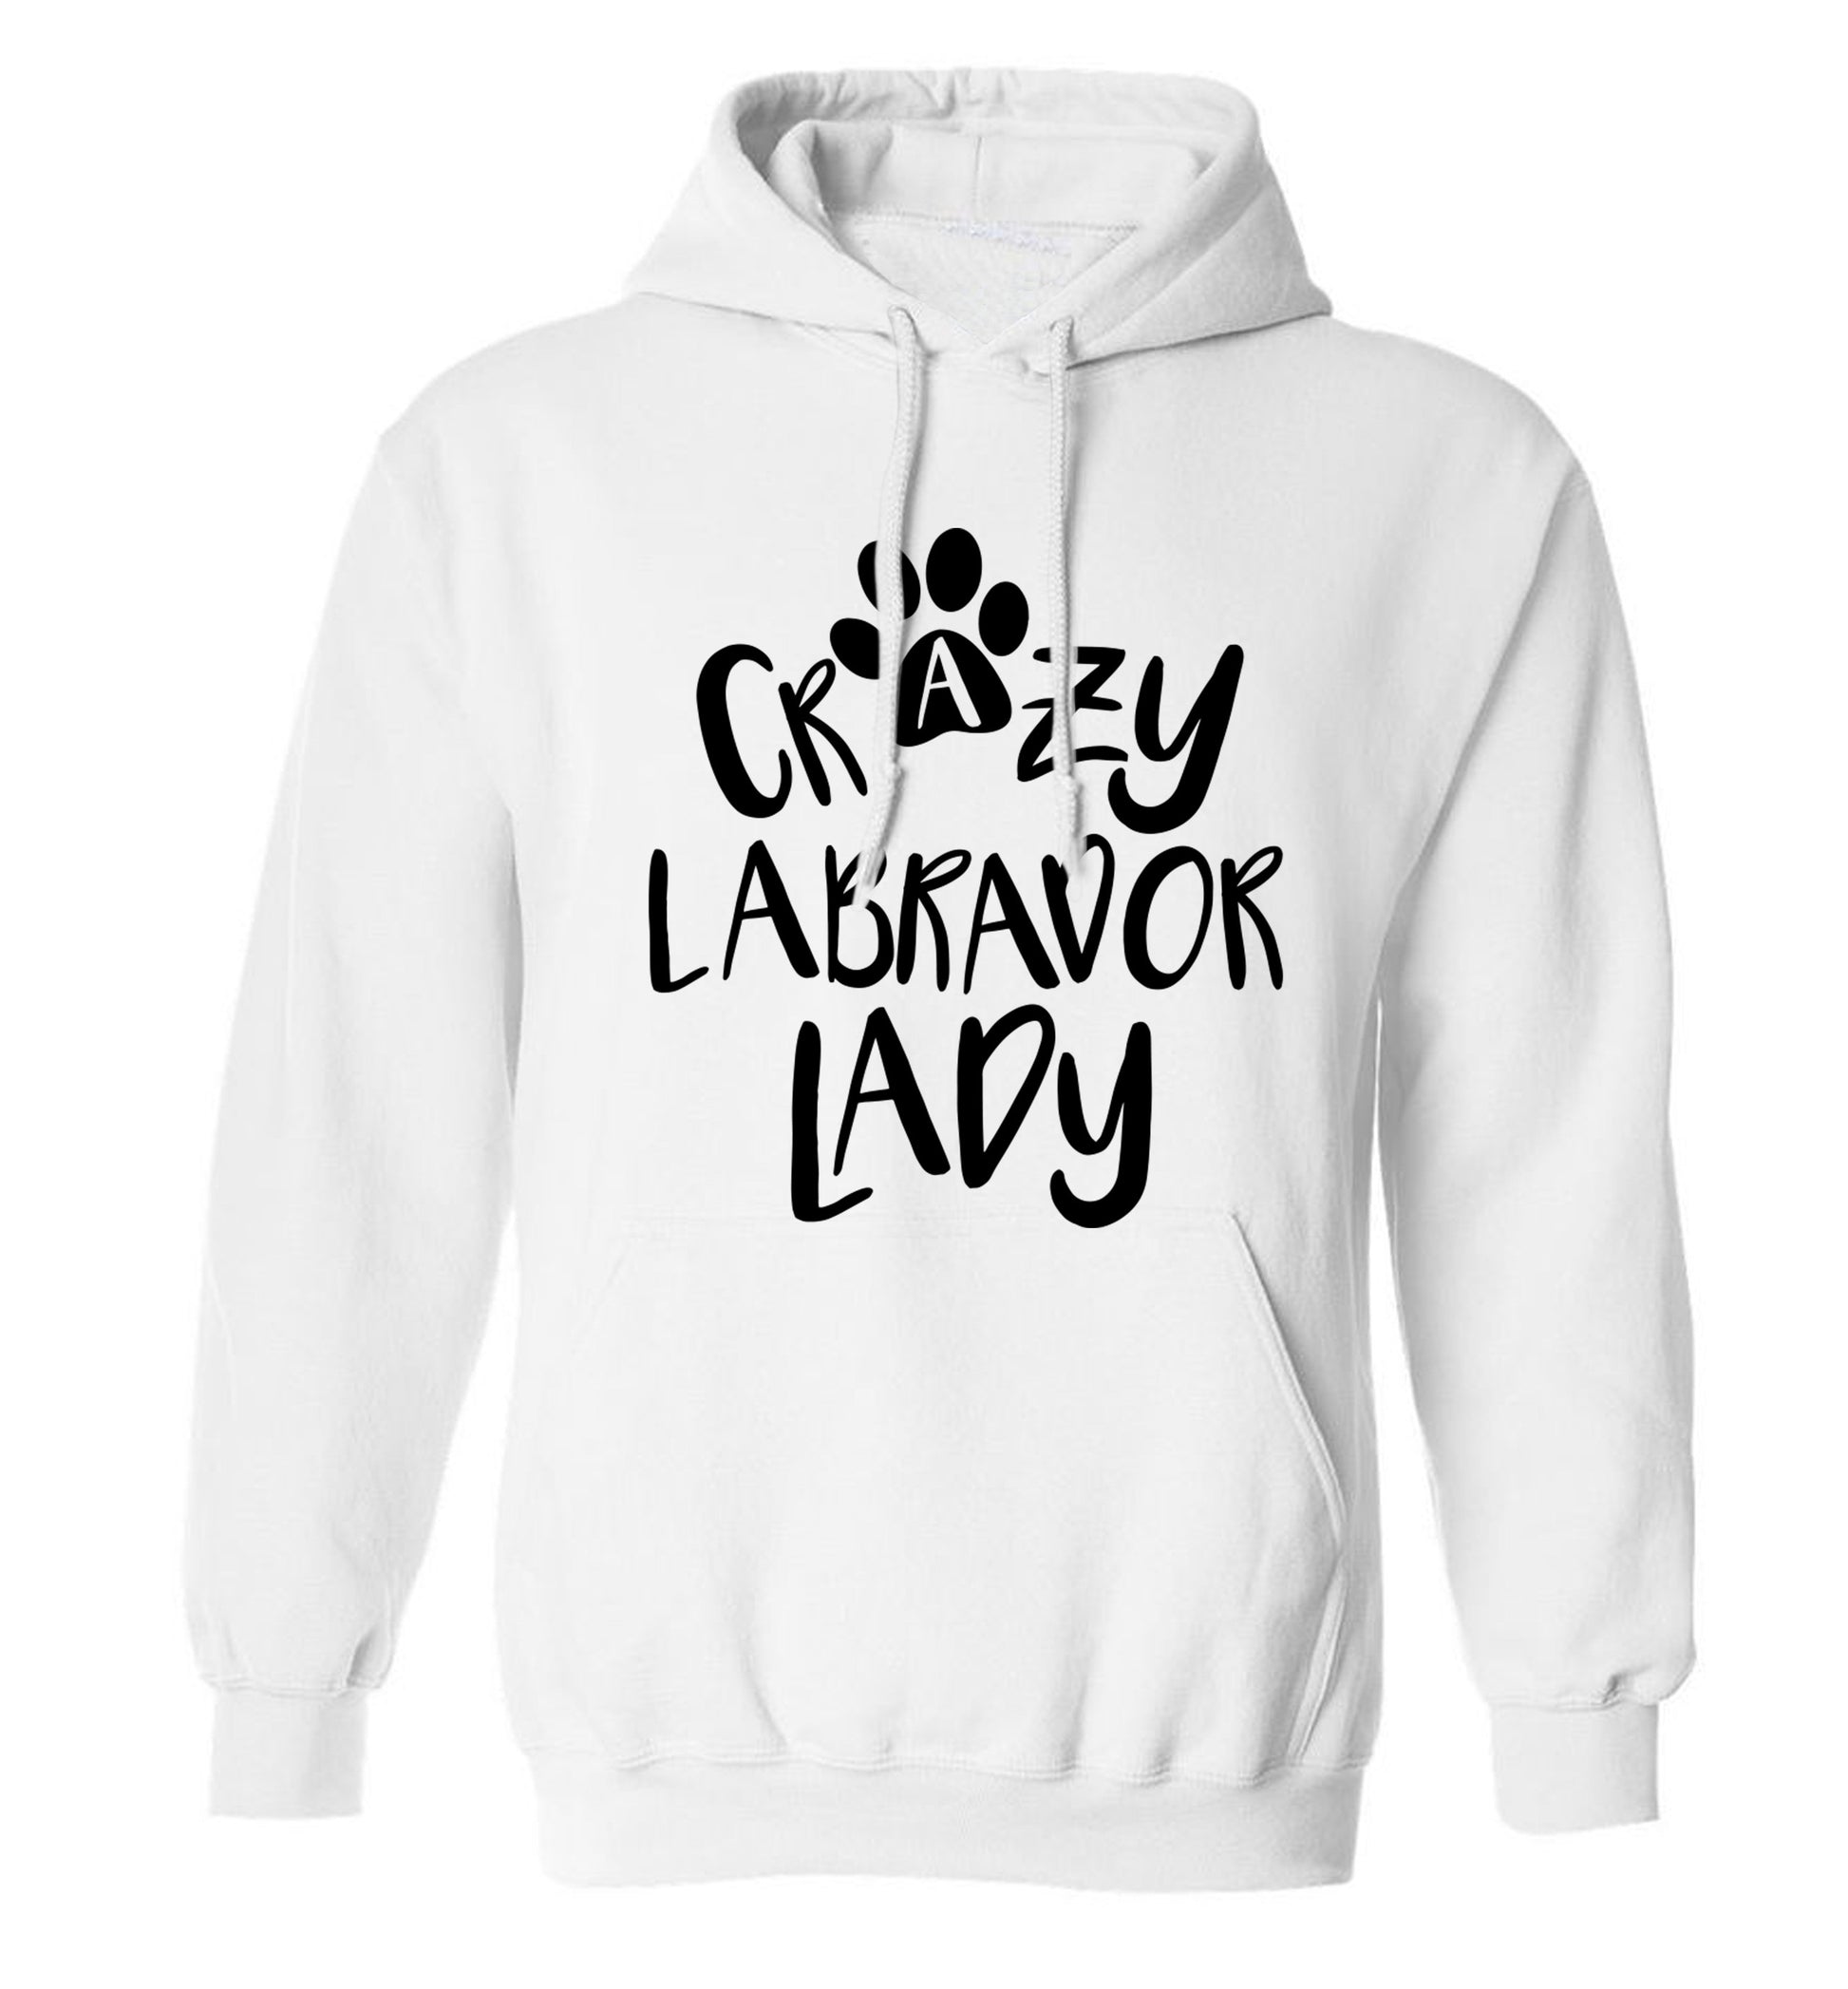 Crazy labrador lady adults unisex white hoodie 2XL